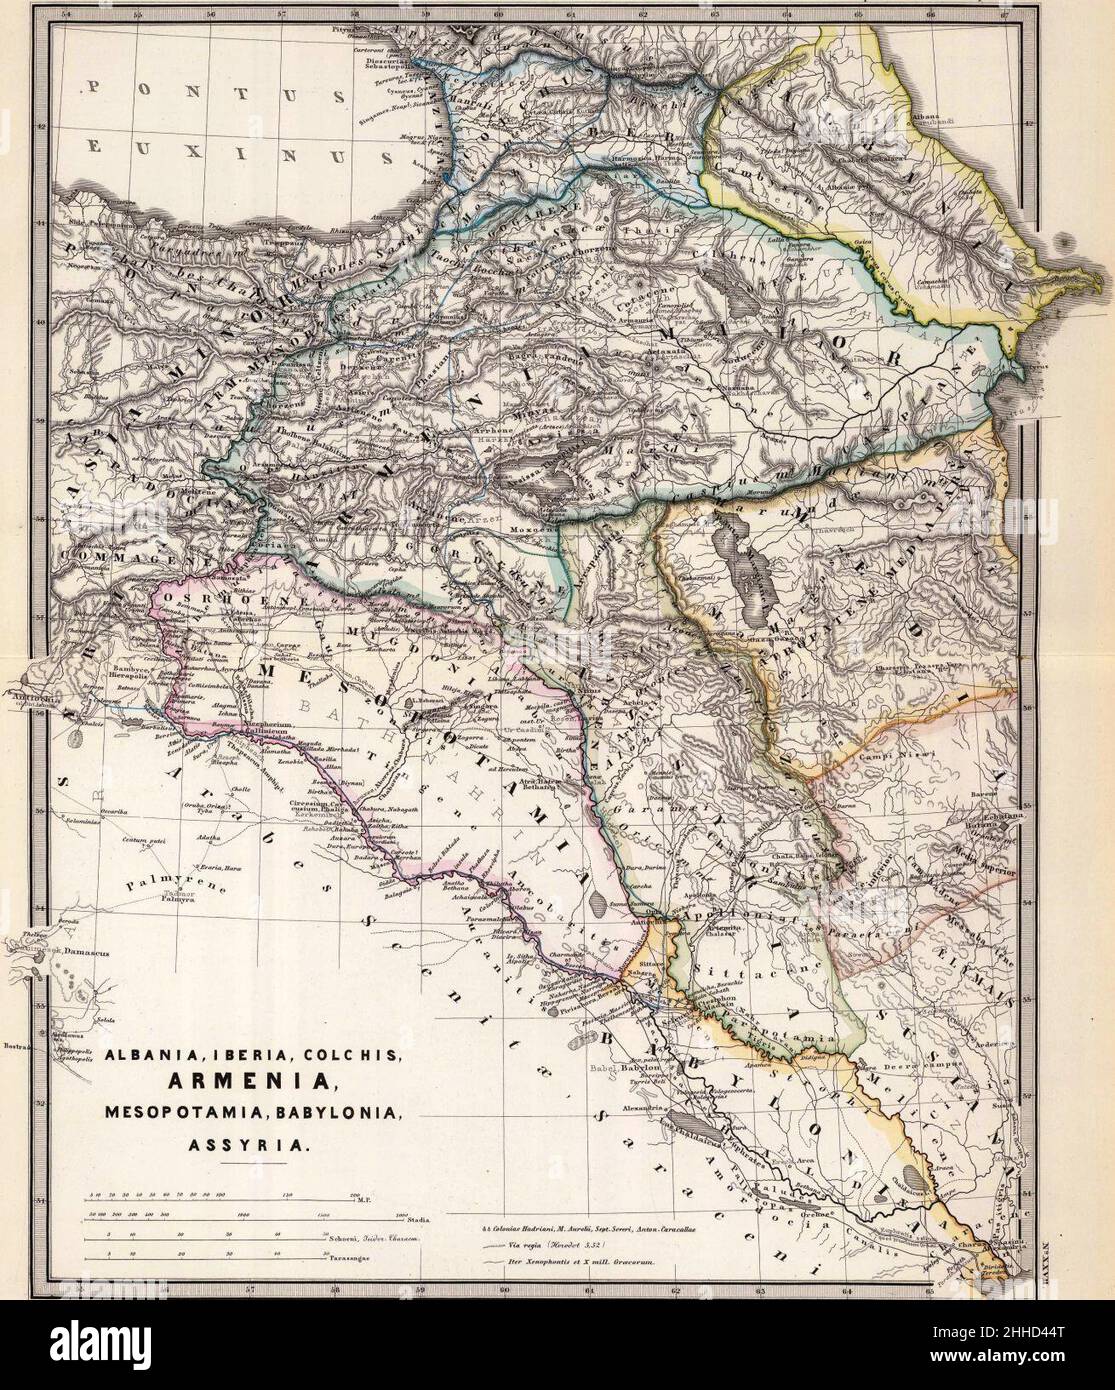 Spruner von Merz, Karl; Menke, TH.1865. Albanie, Iberia, Colchis, Arménie, Mésopotamie,Babylonia, Assyrie (A). Banque D'Images